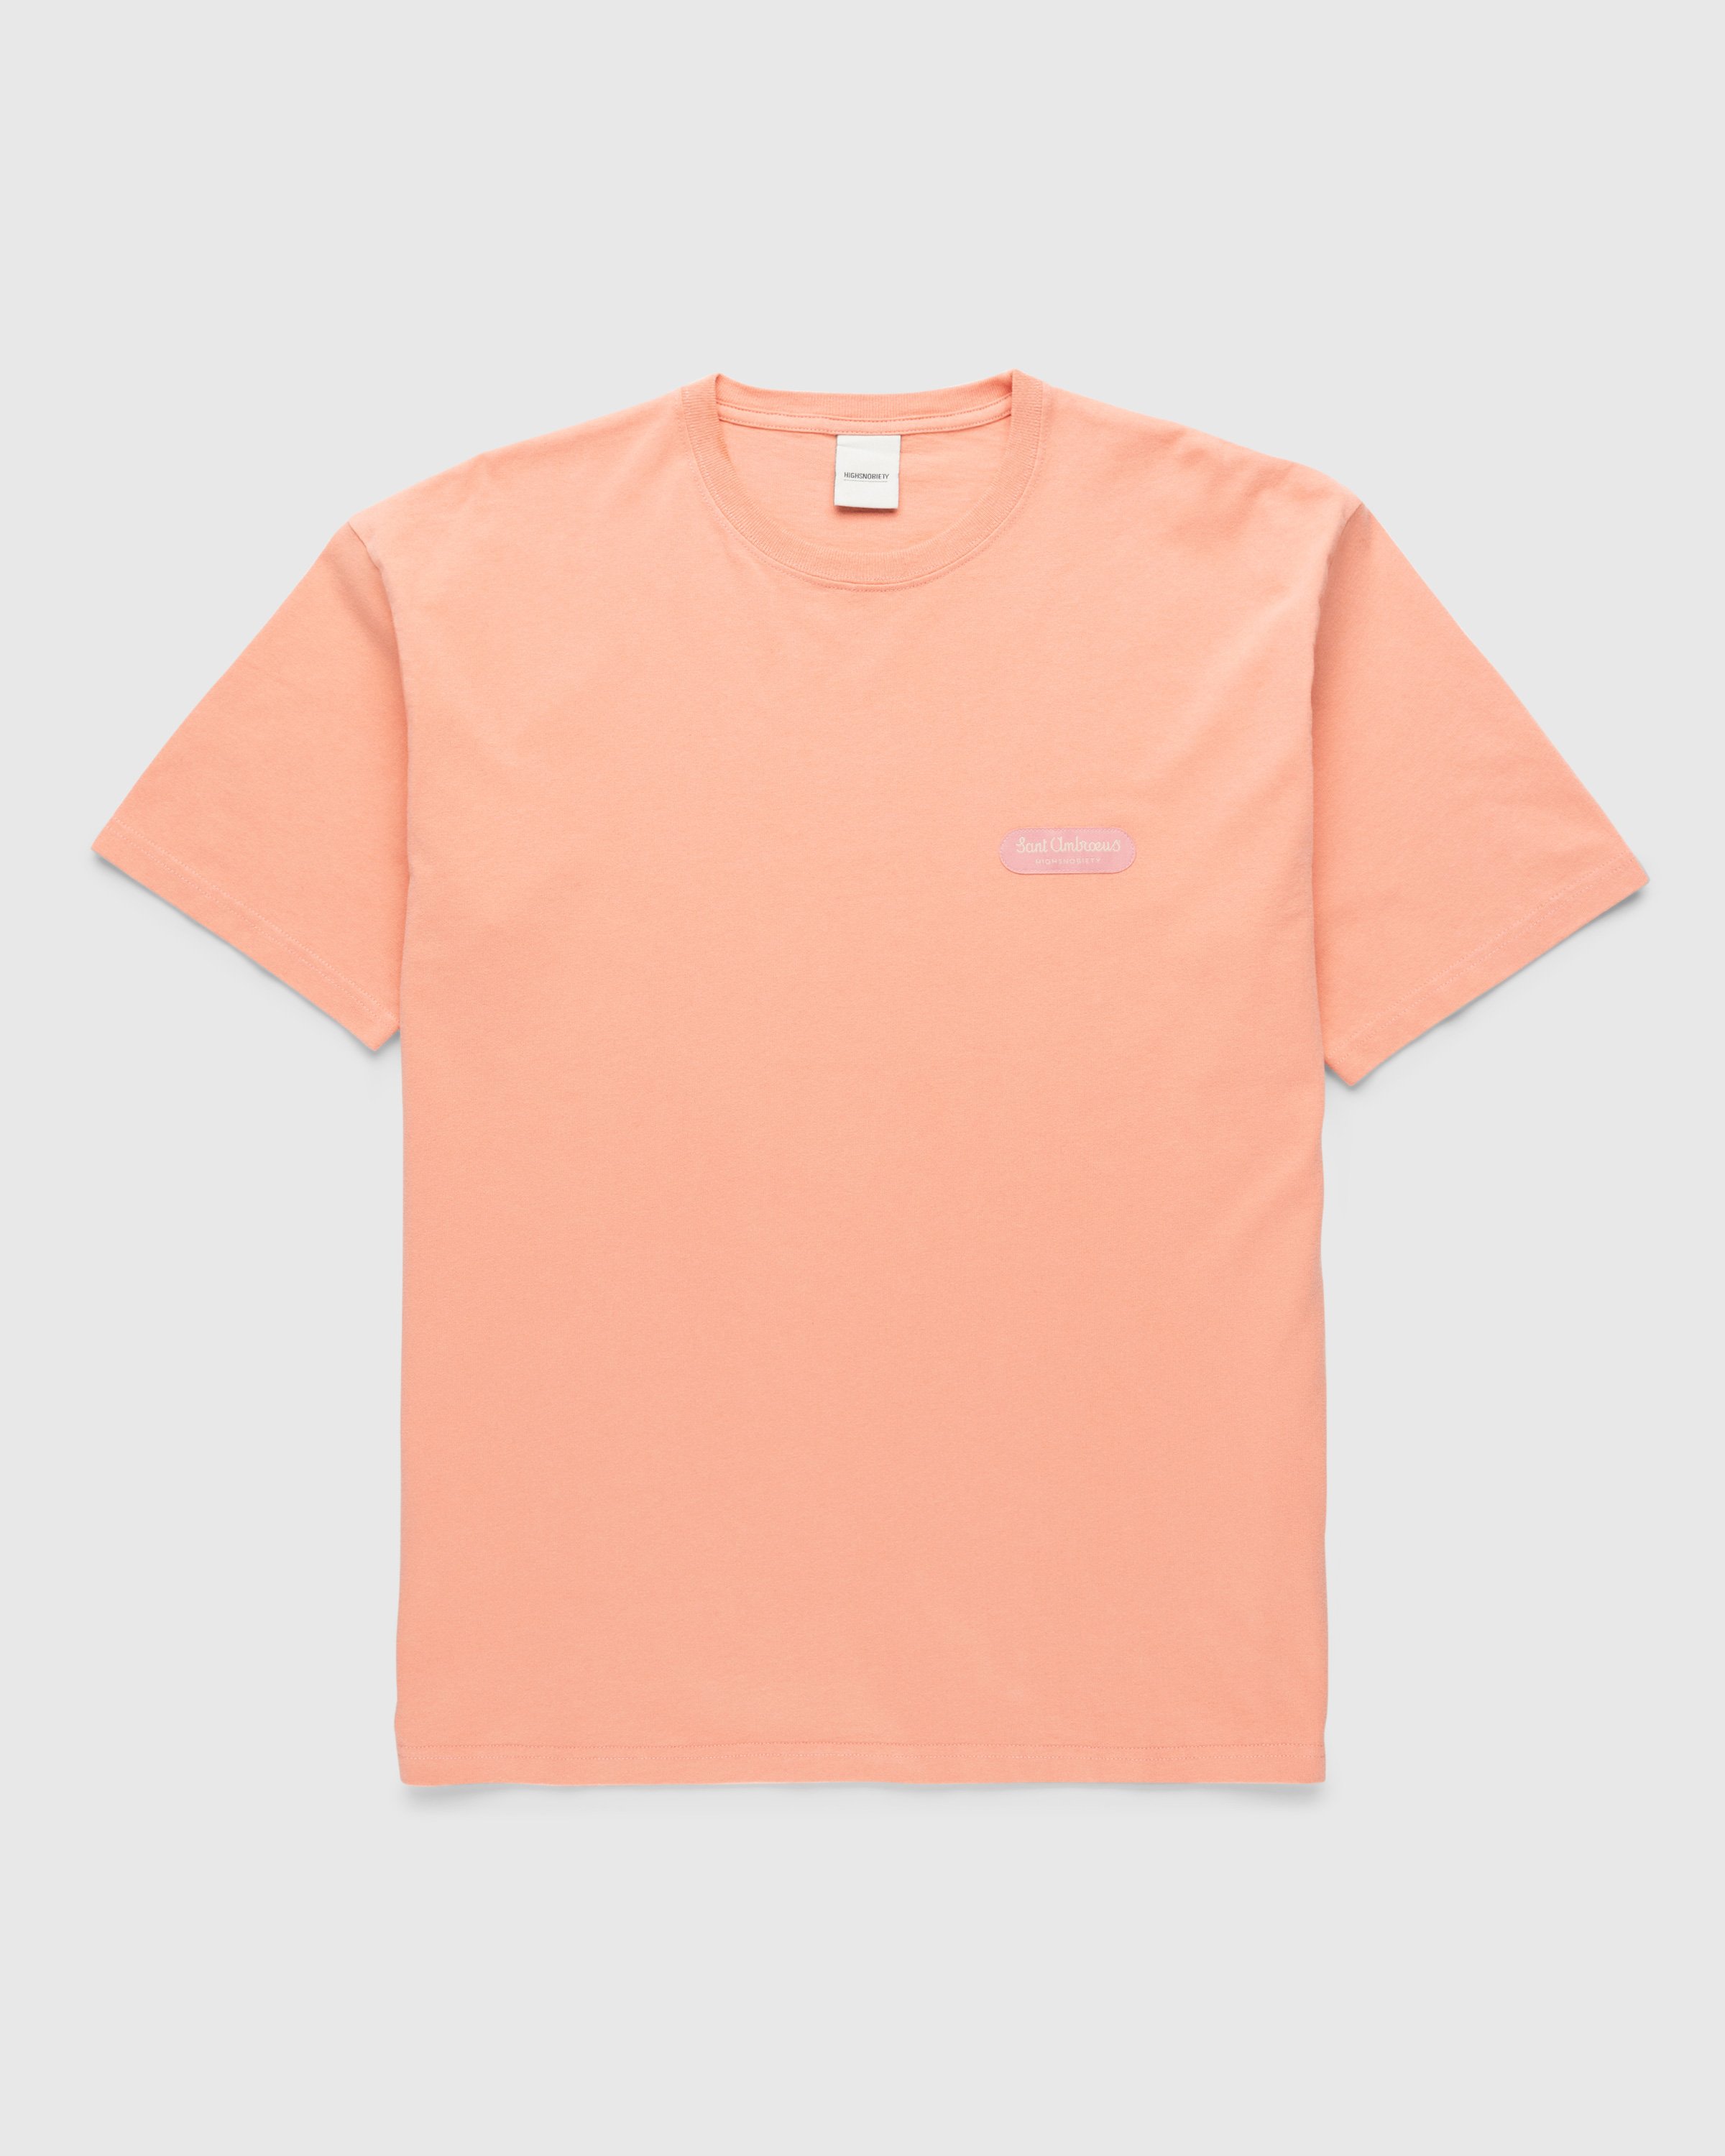 Highsnobiety x Sant Ambroeus - Pink T-Shirt - Clothing - Pink - Image 2